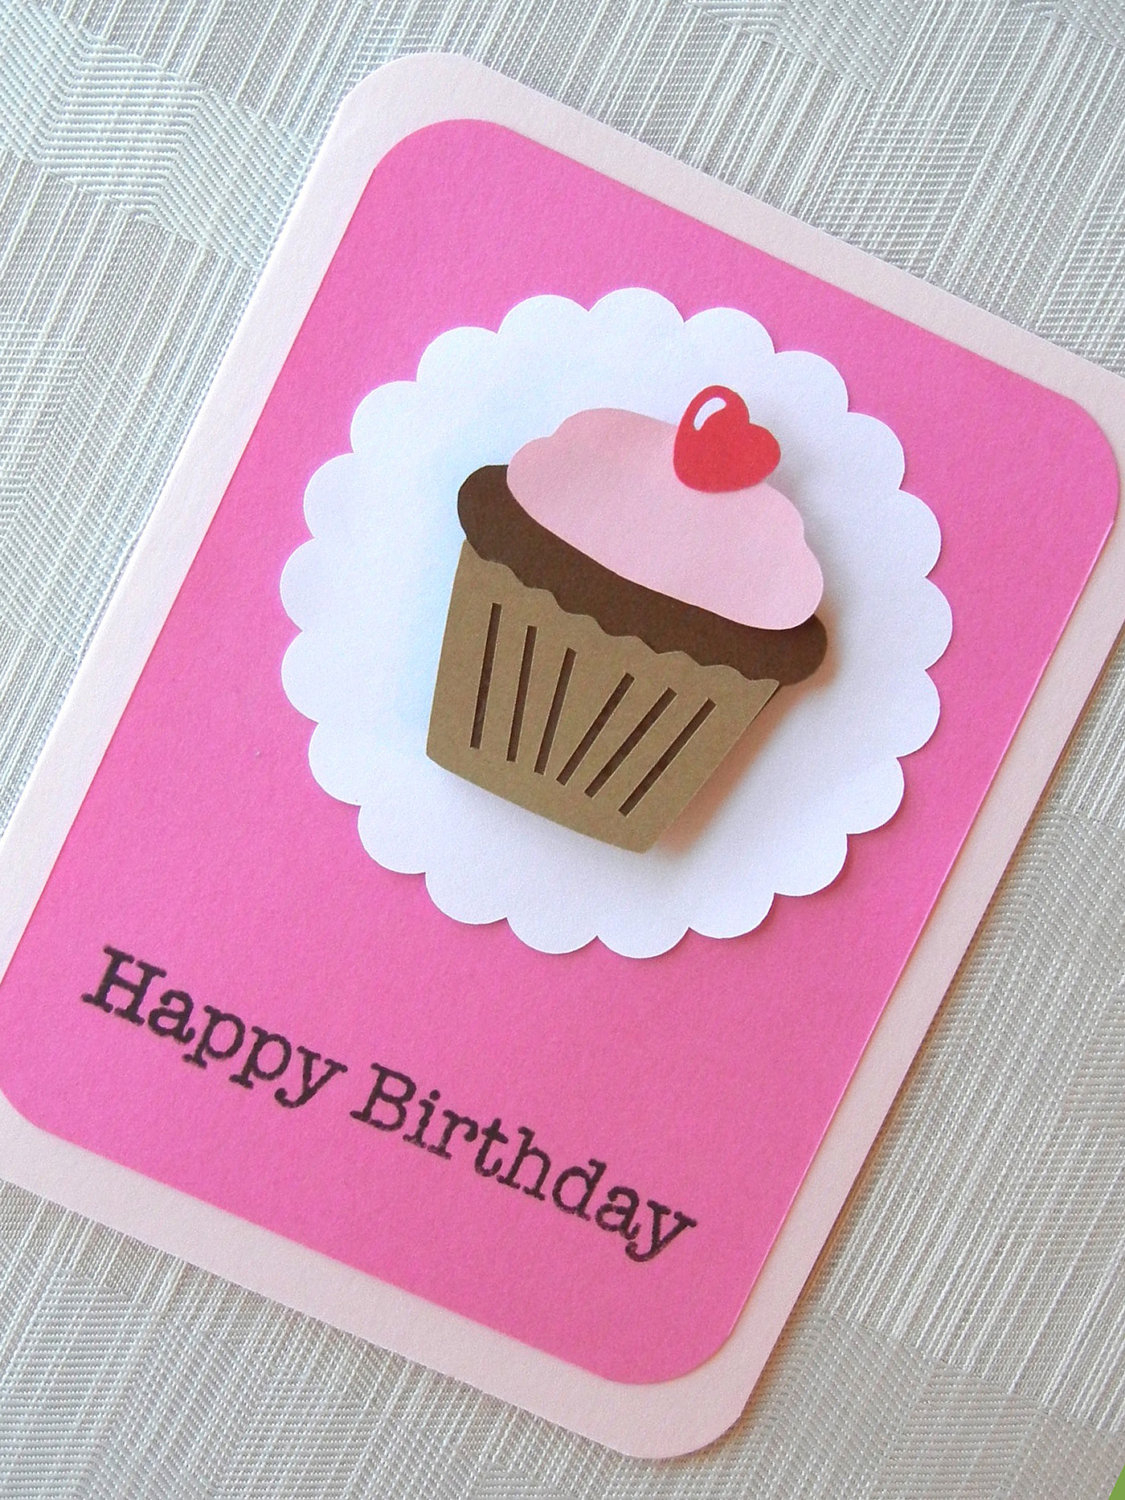 Happy Birthday Cards Homemade Ideas Easy Diy Birthday Cards Ideas And Designs